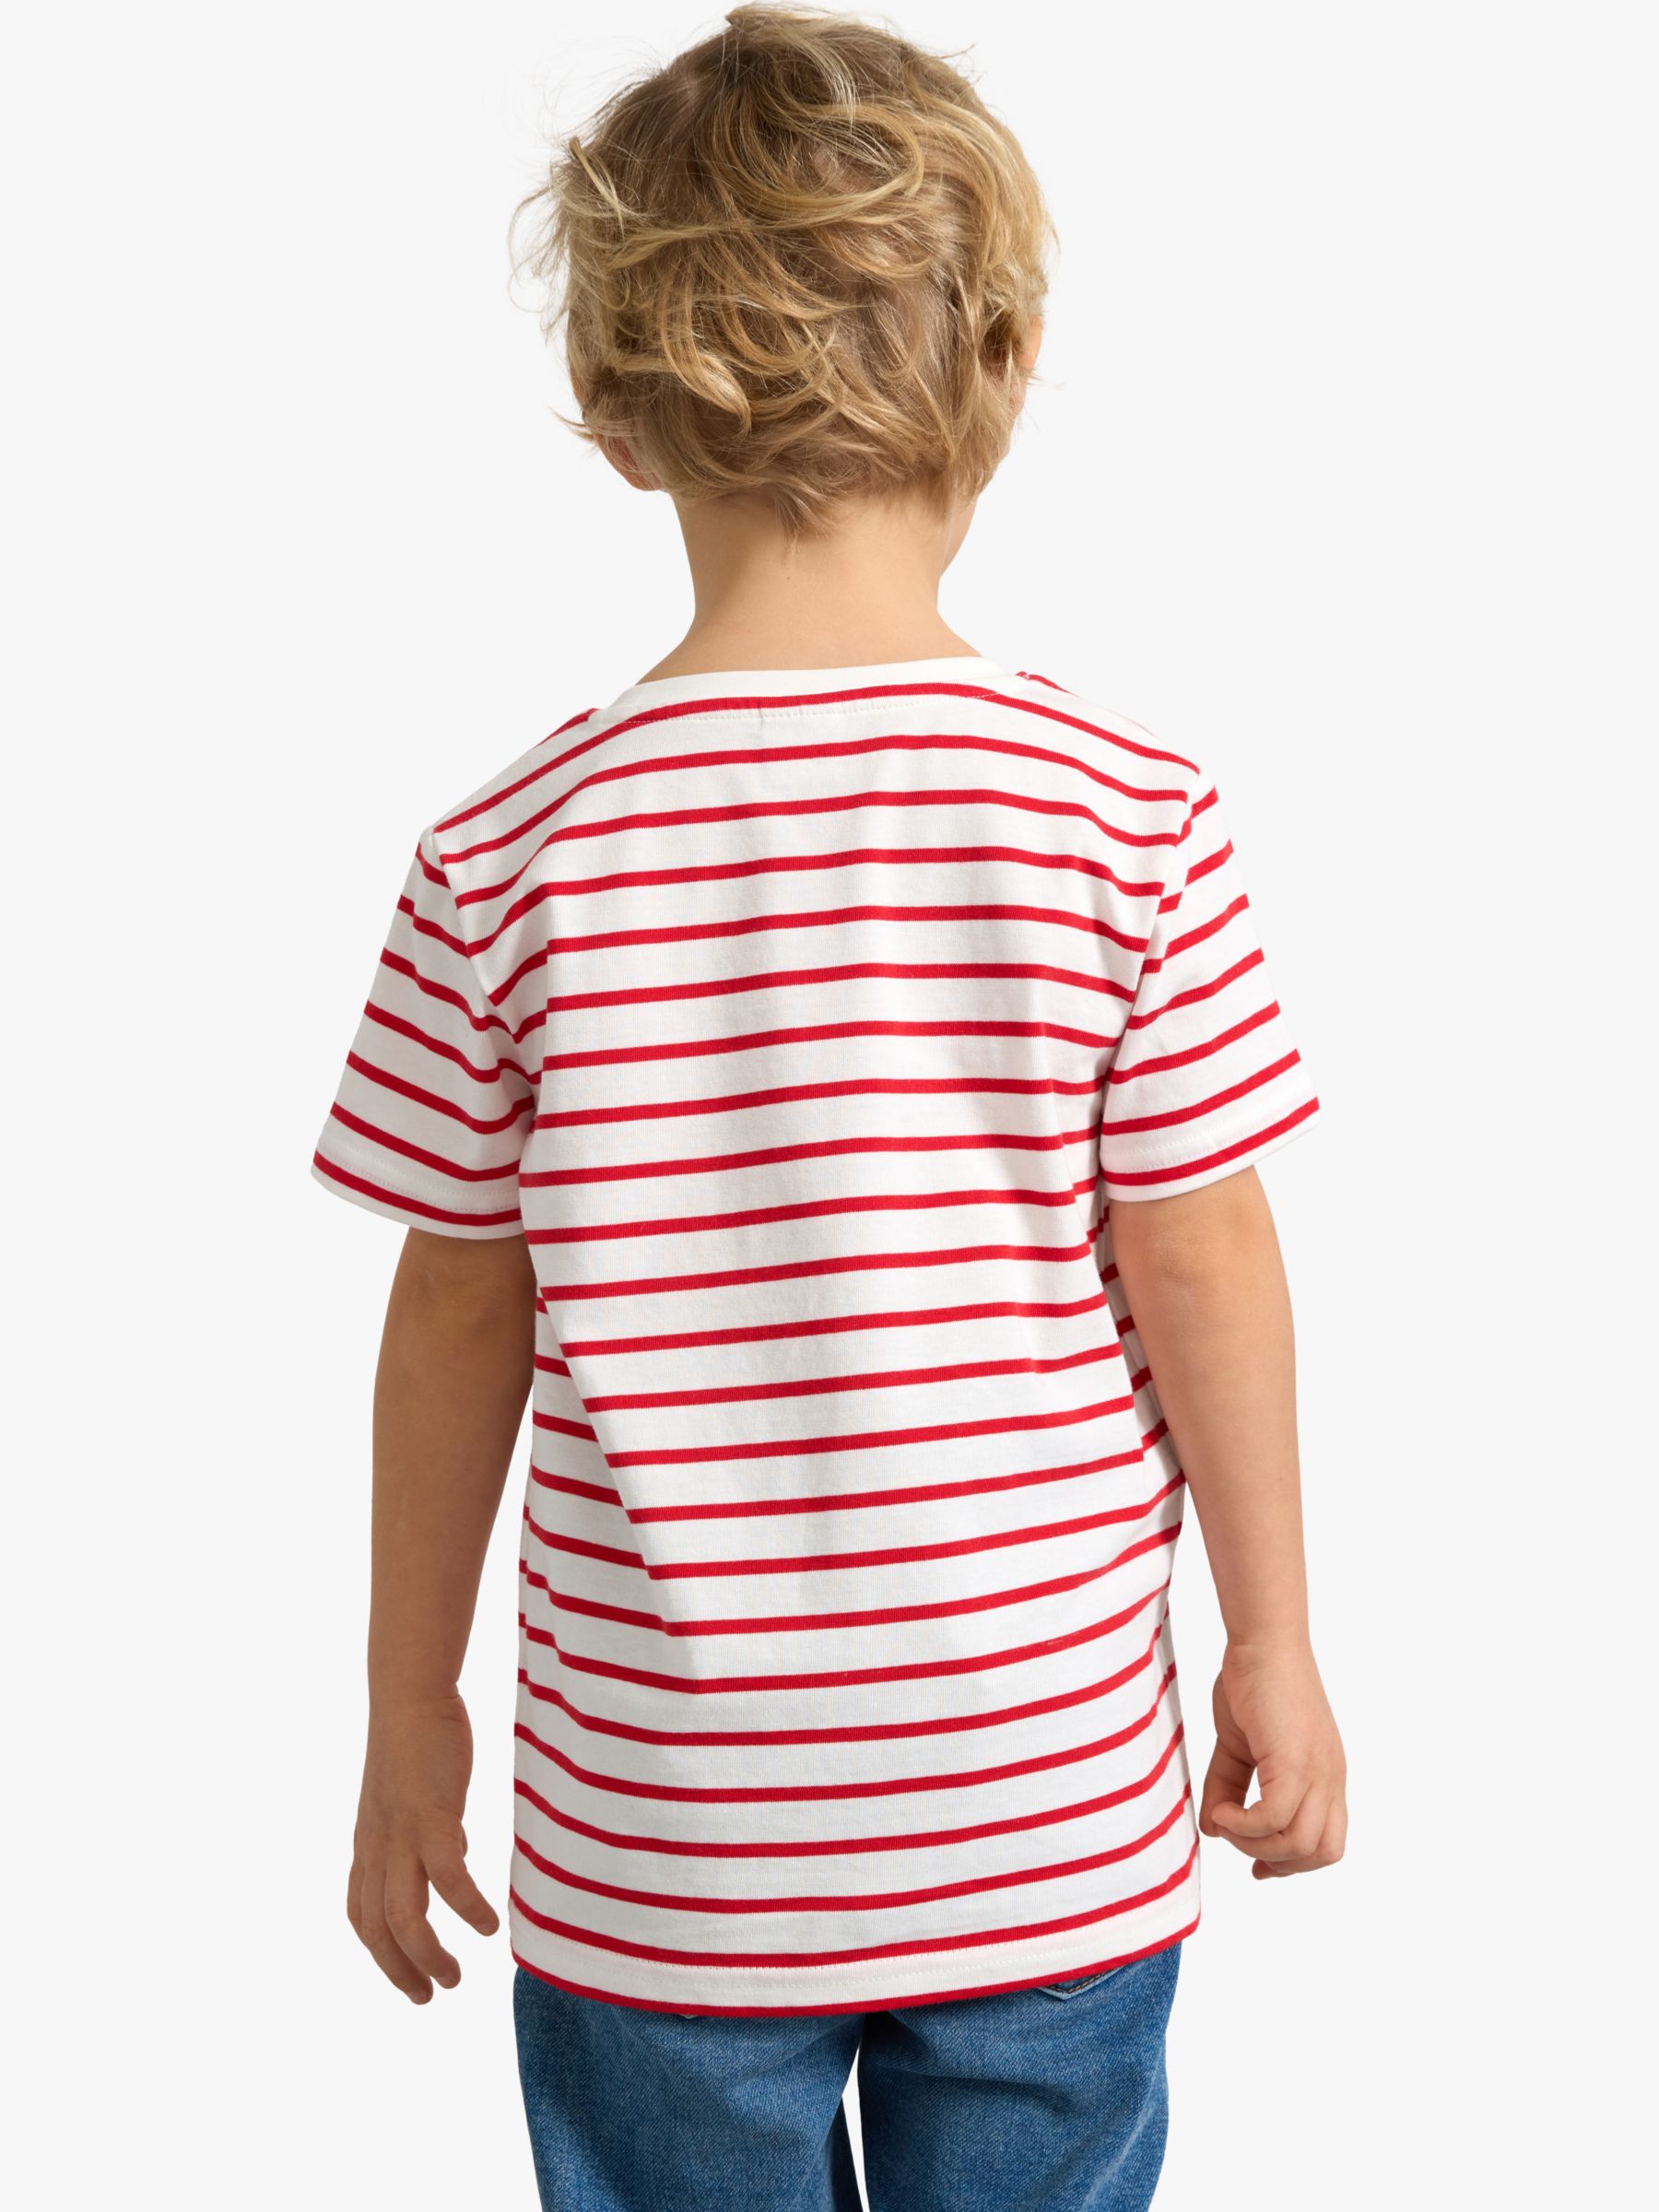 Lindex Kids' Stripe Short Sleeve T-Shirt, Red, 18-24 months